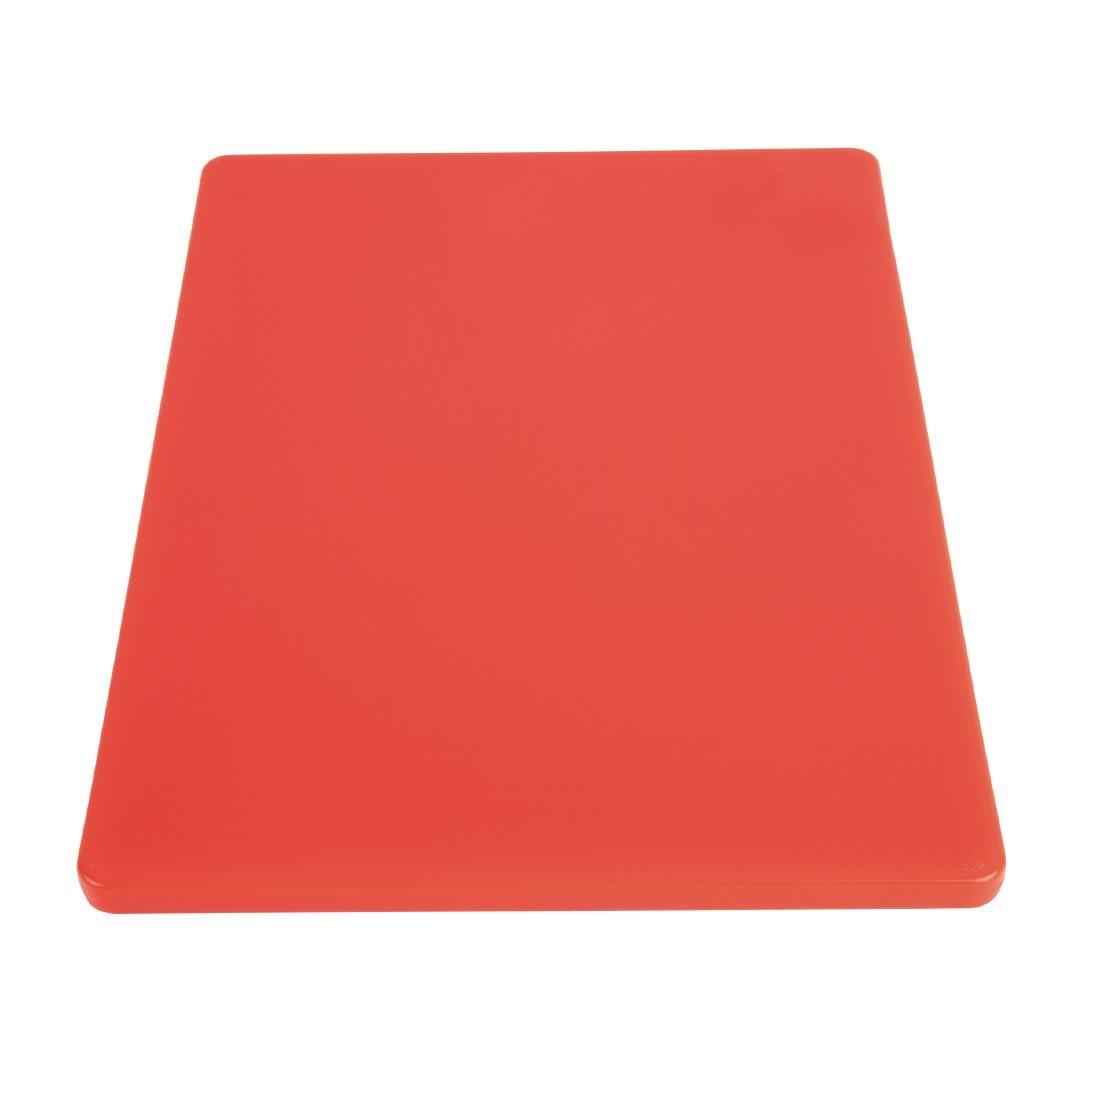 Hygiplas Low Density Red Chopping Board Small - GH794  - 2